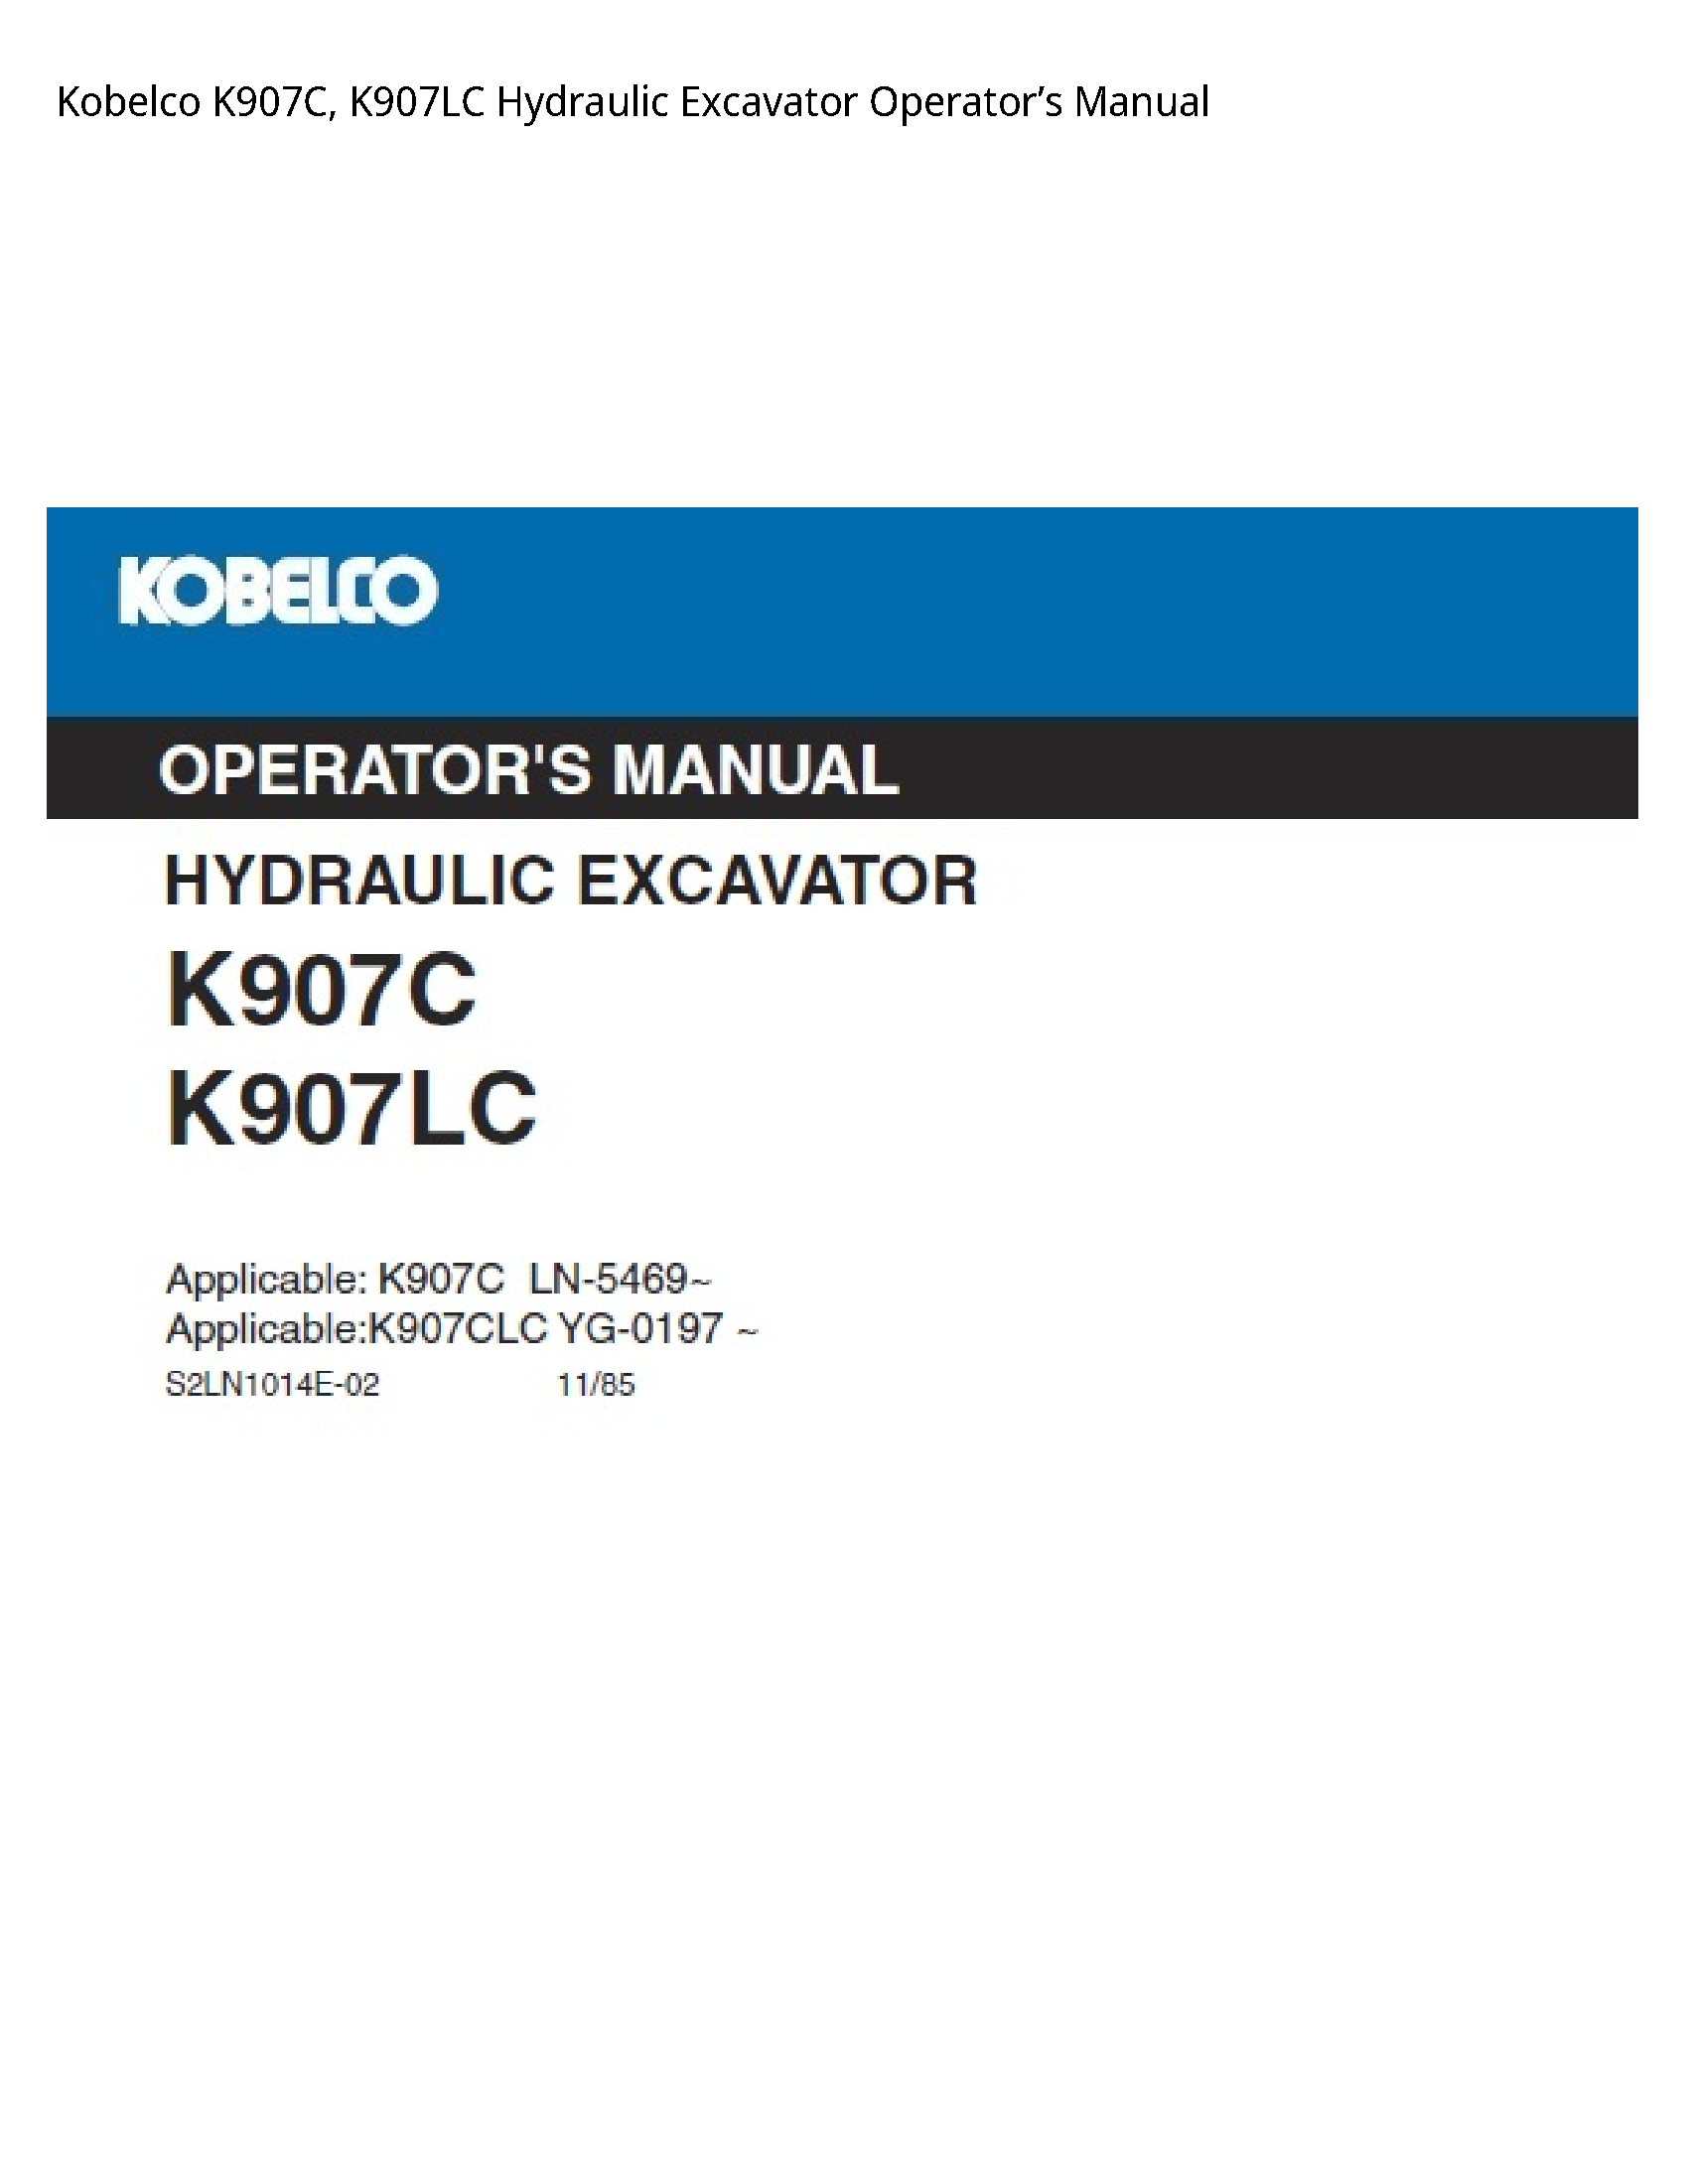 Kobelco K907C Hydraulic Excavator Operator’s manual